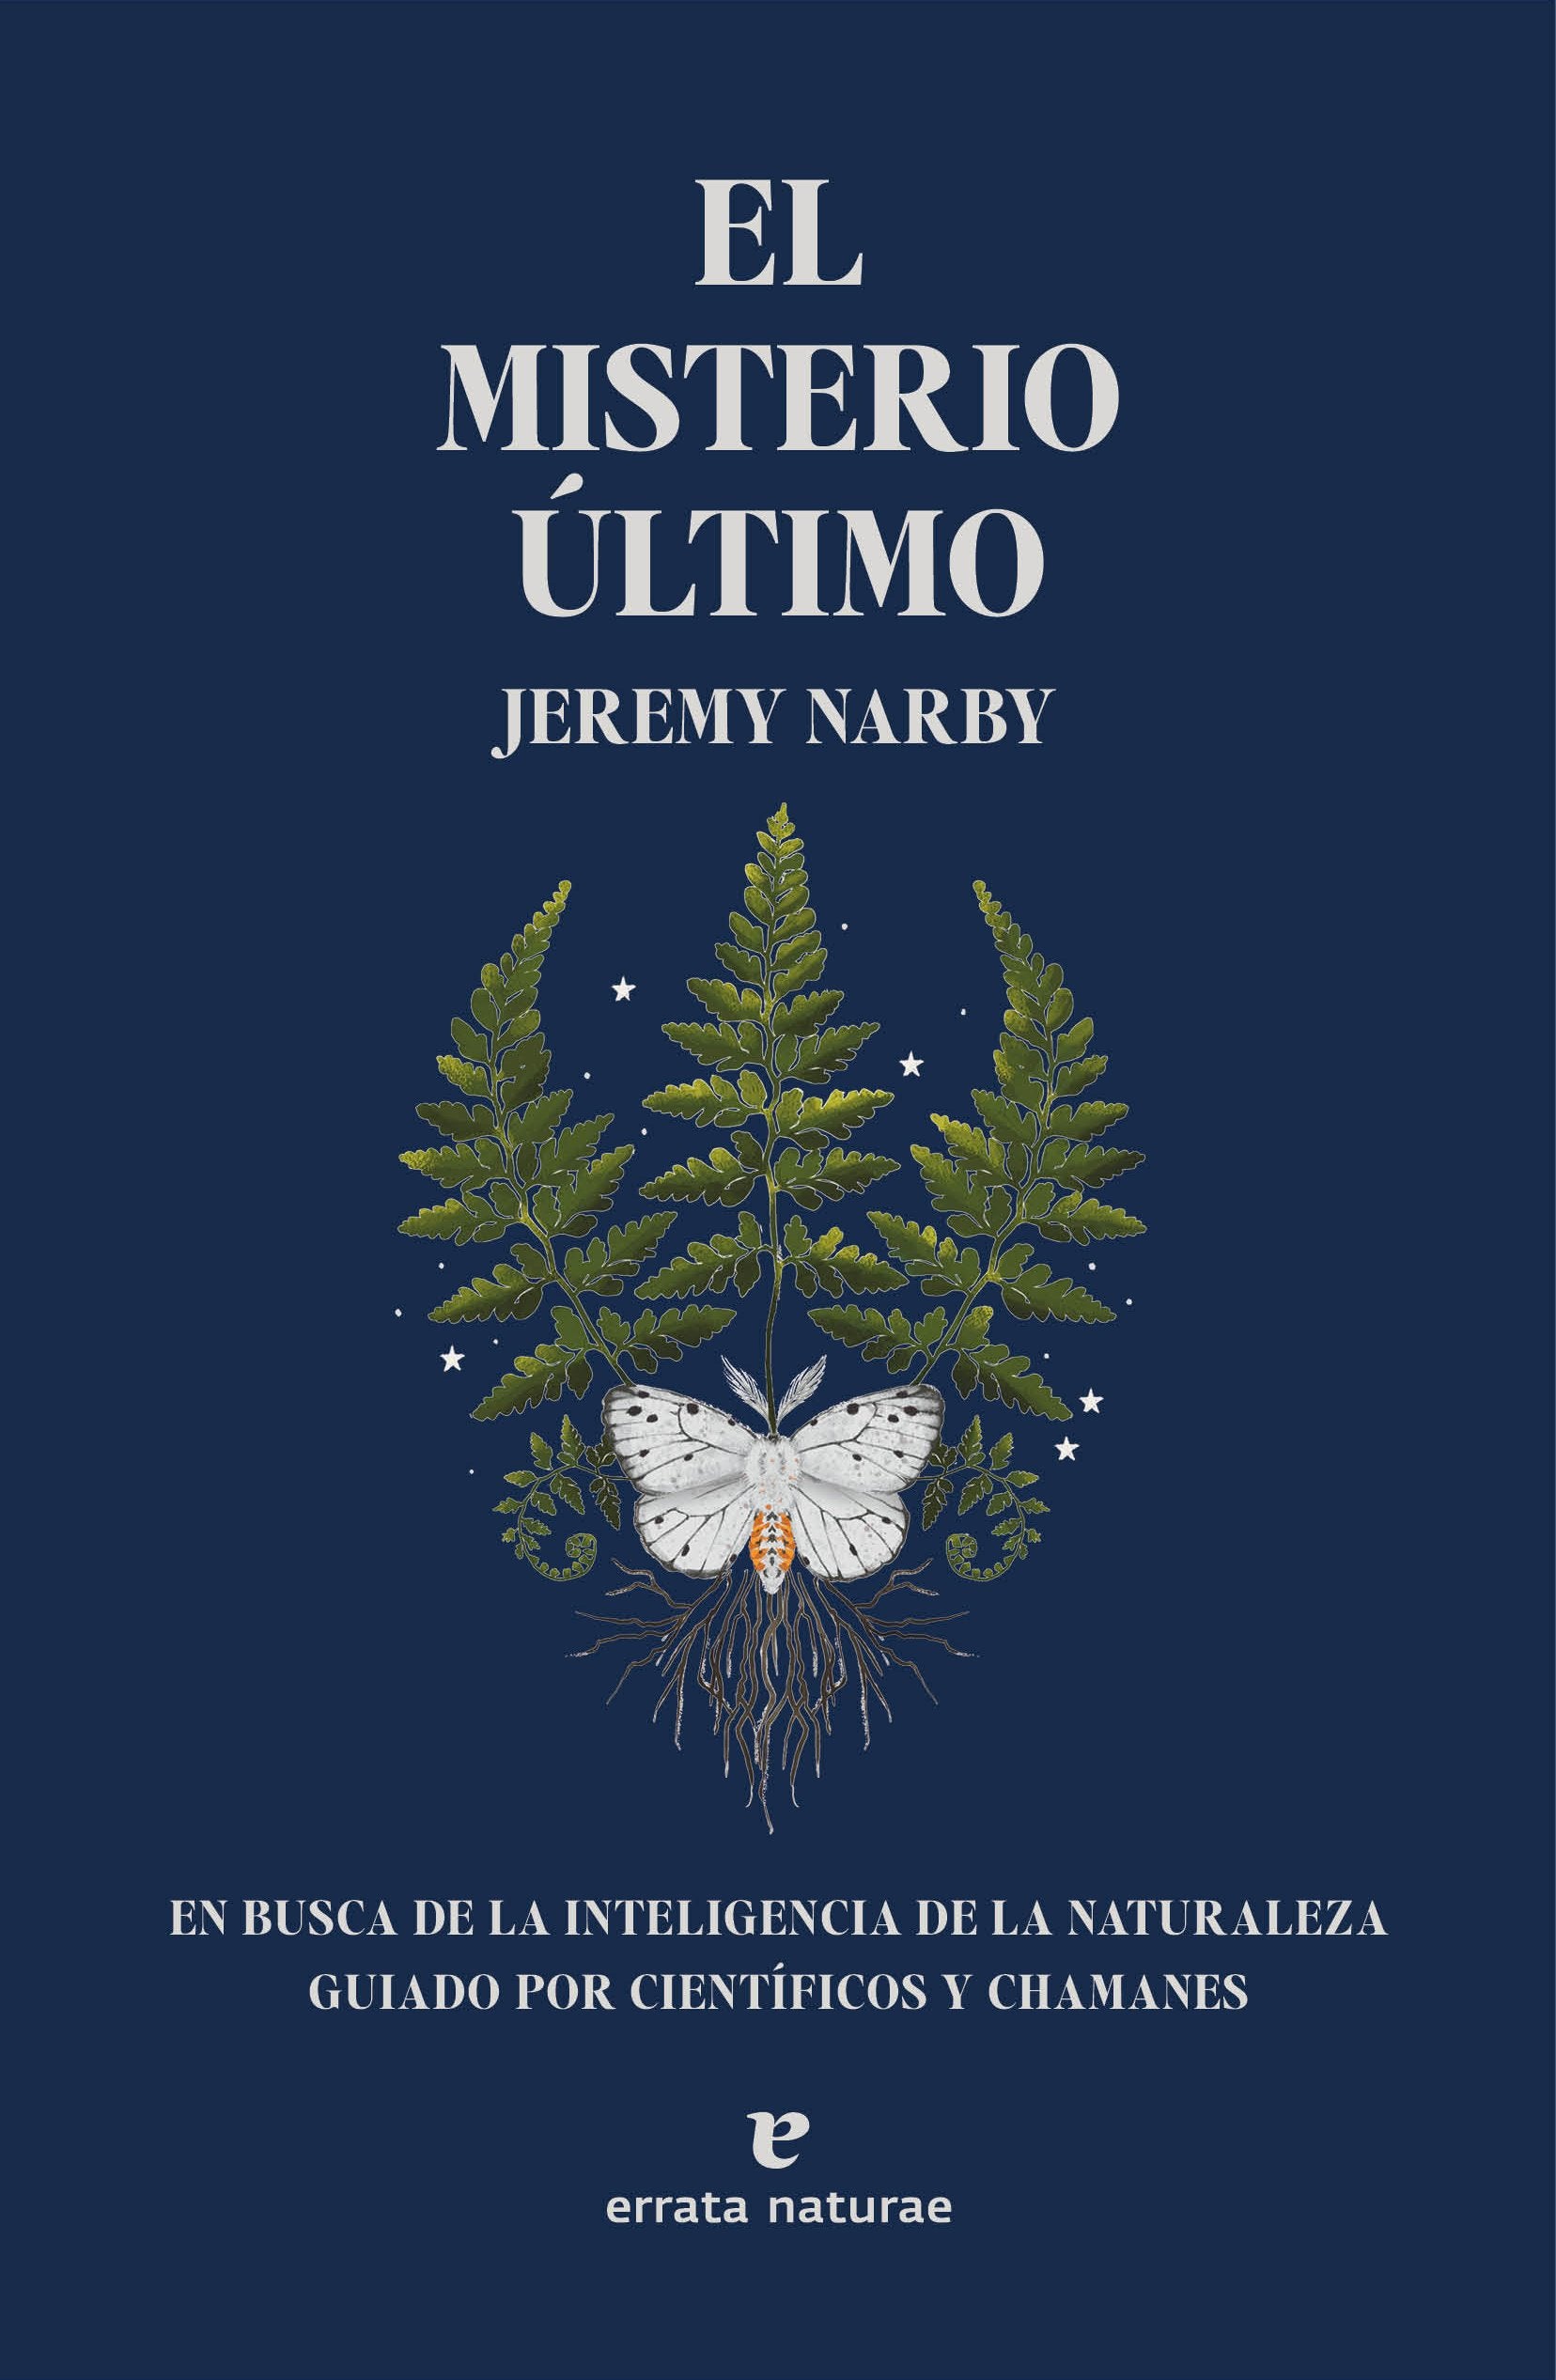 El misterio último - Jeremy Narby